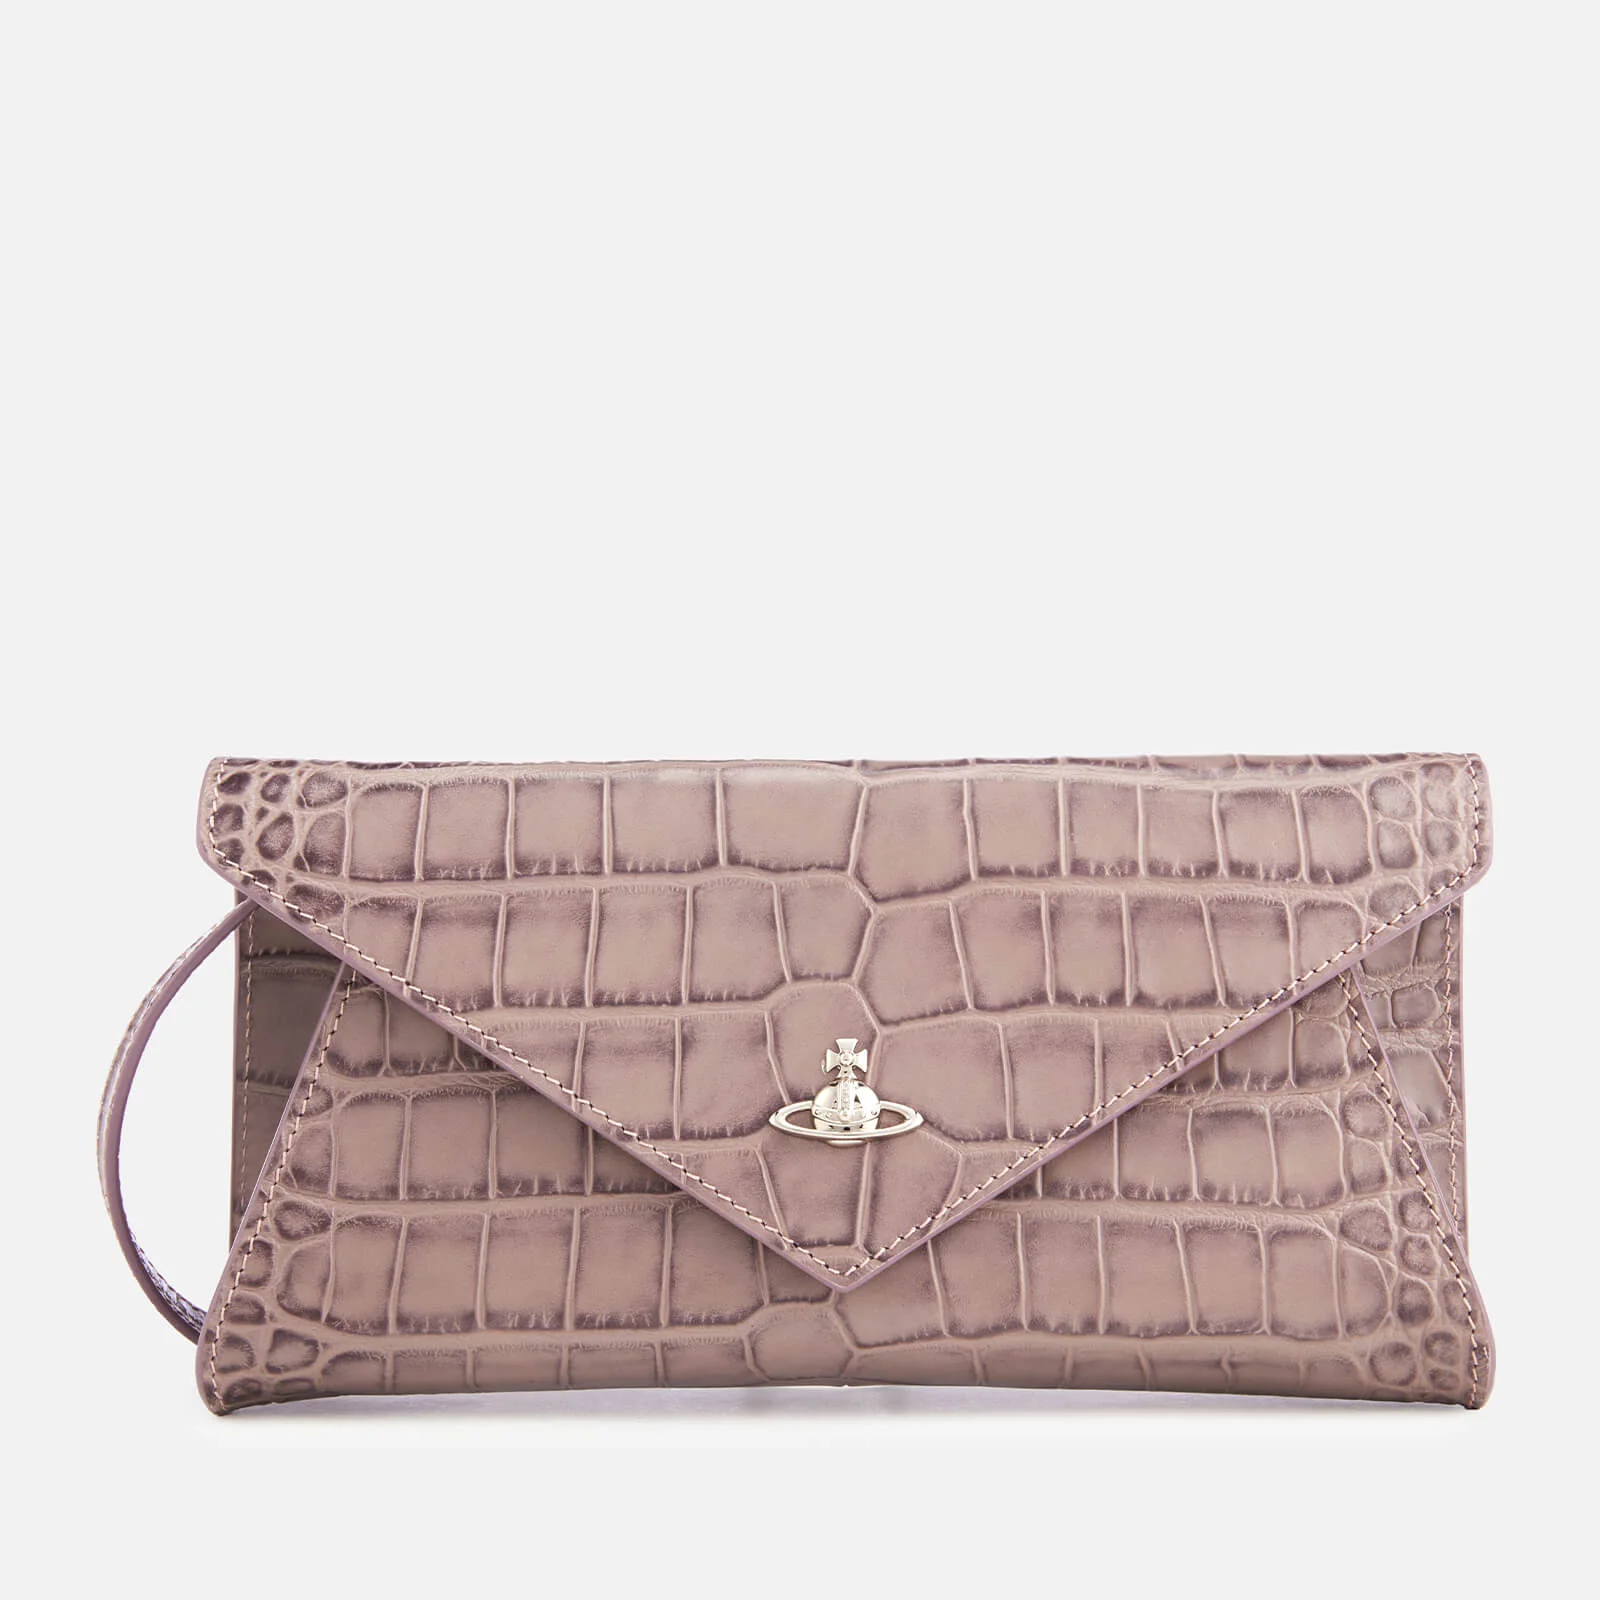 Vivienne Westwood Women's Lisa Envelope Clutch Bag - Pink Image 1